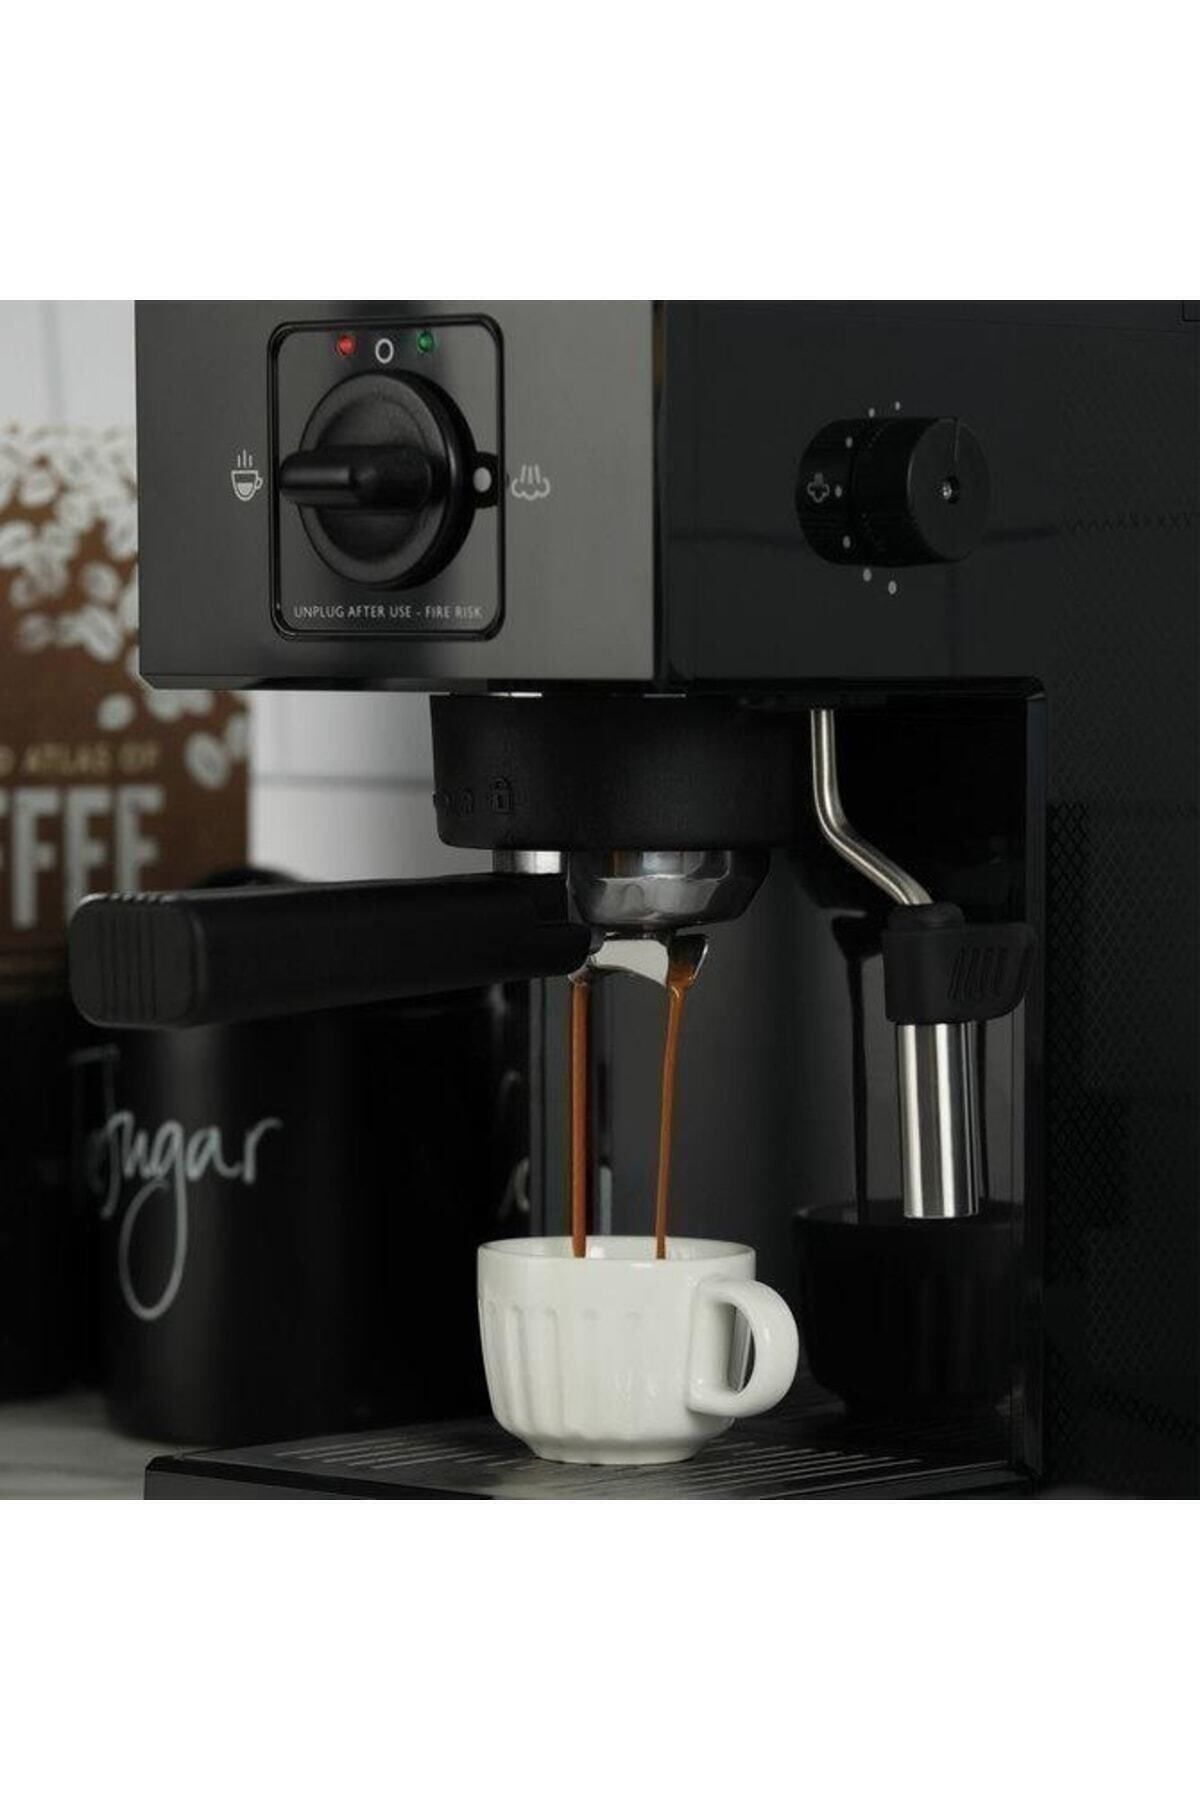 Dualit 84470 Espresso Kahve Makinesi Öğütülmüş Kahve Ve Ese Kapsülleri Ile Uyumlu